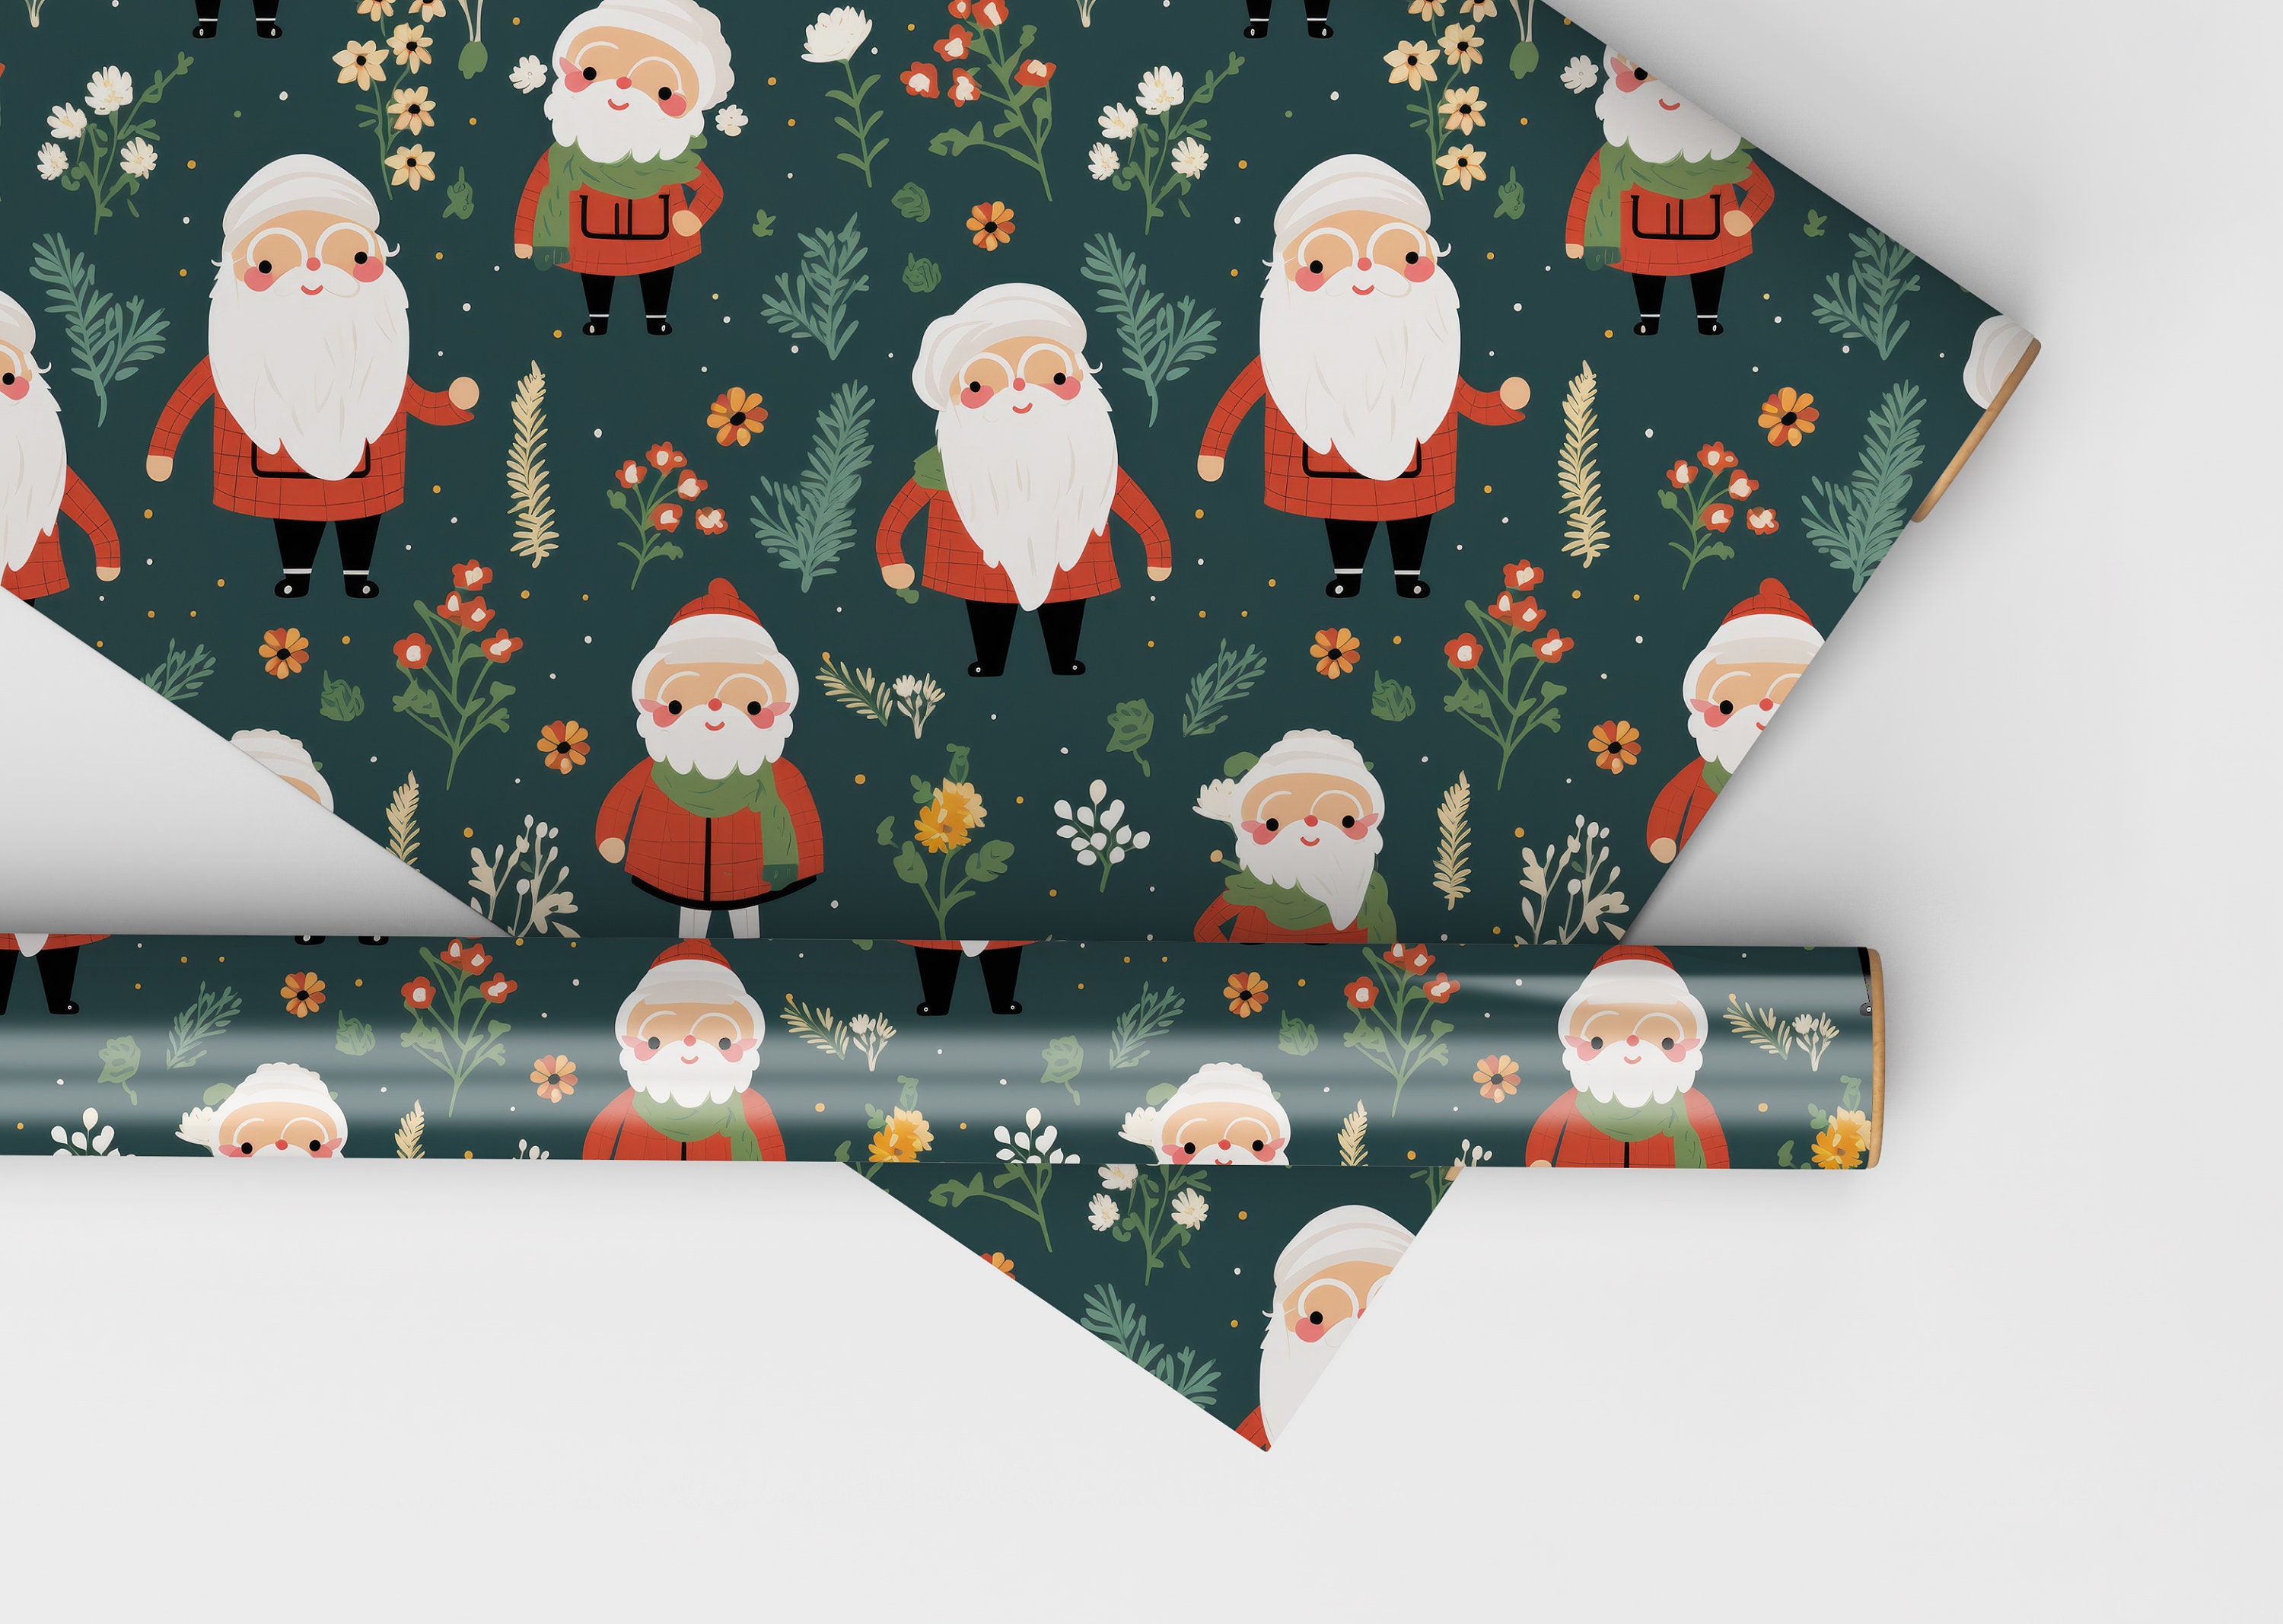 Black Santa Wrapping Paper Roll, Cute Santa Gift Wrap Roll, Modern